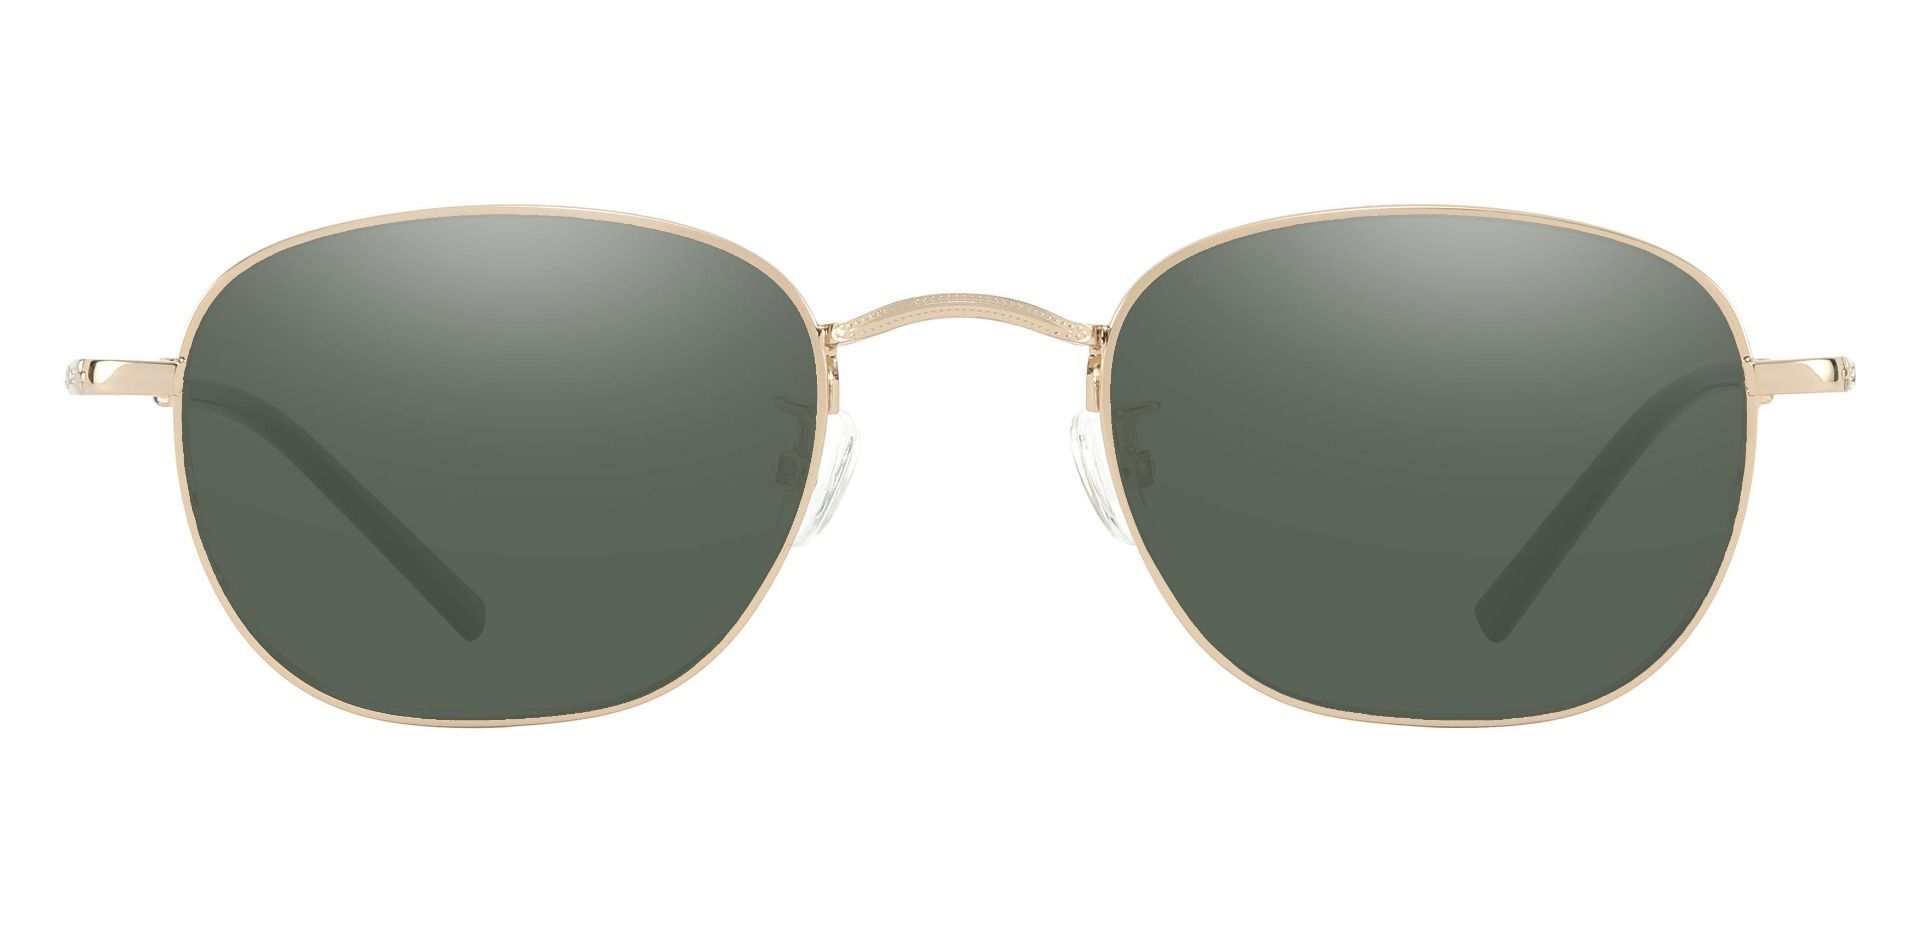 Greece Square Prescription Sunglasses - Gold Frame With Green Lenses